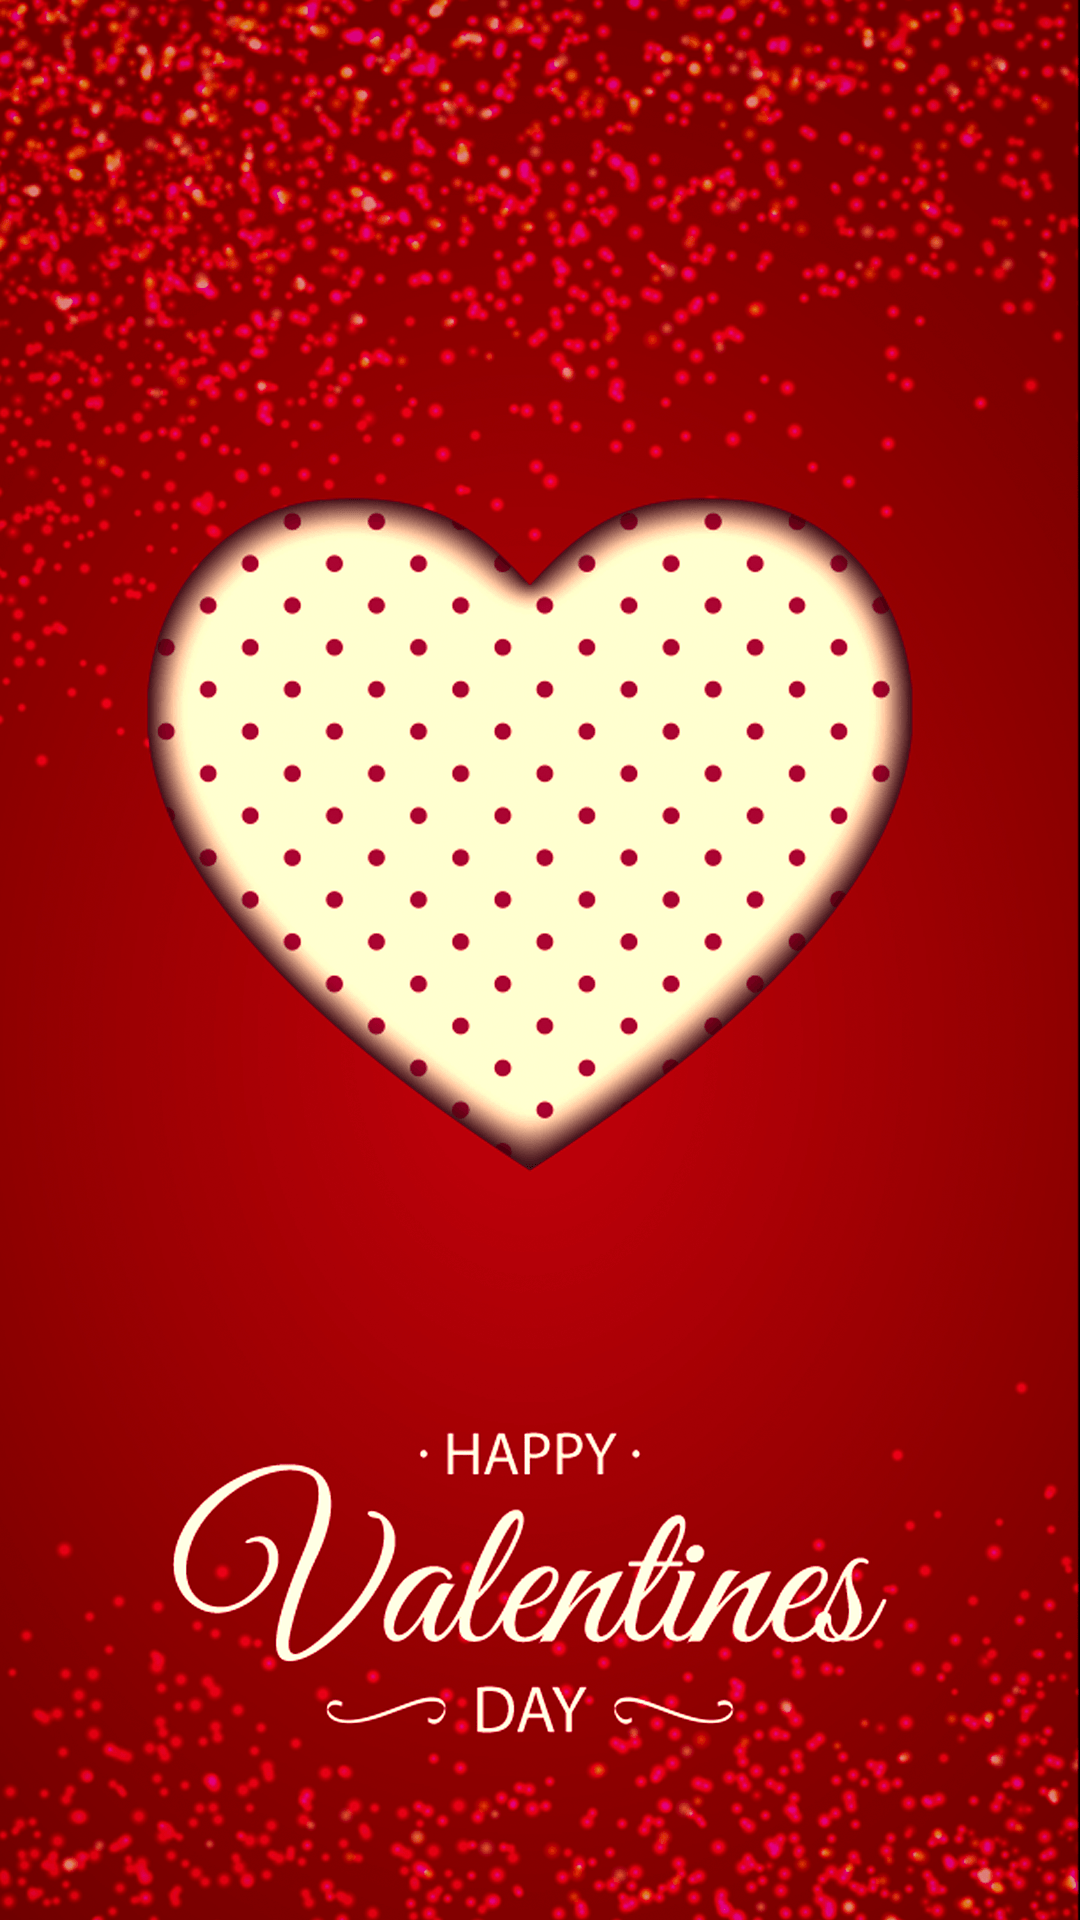 Happy Valentine's Day Image Wallpaper